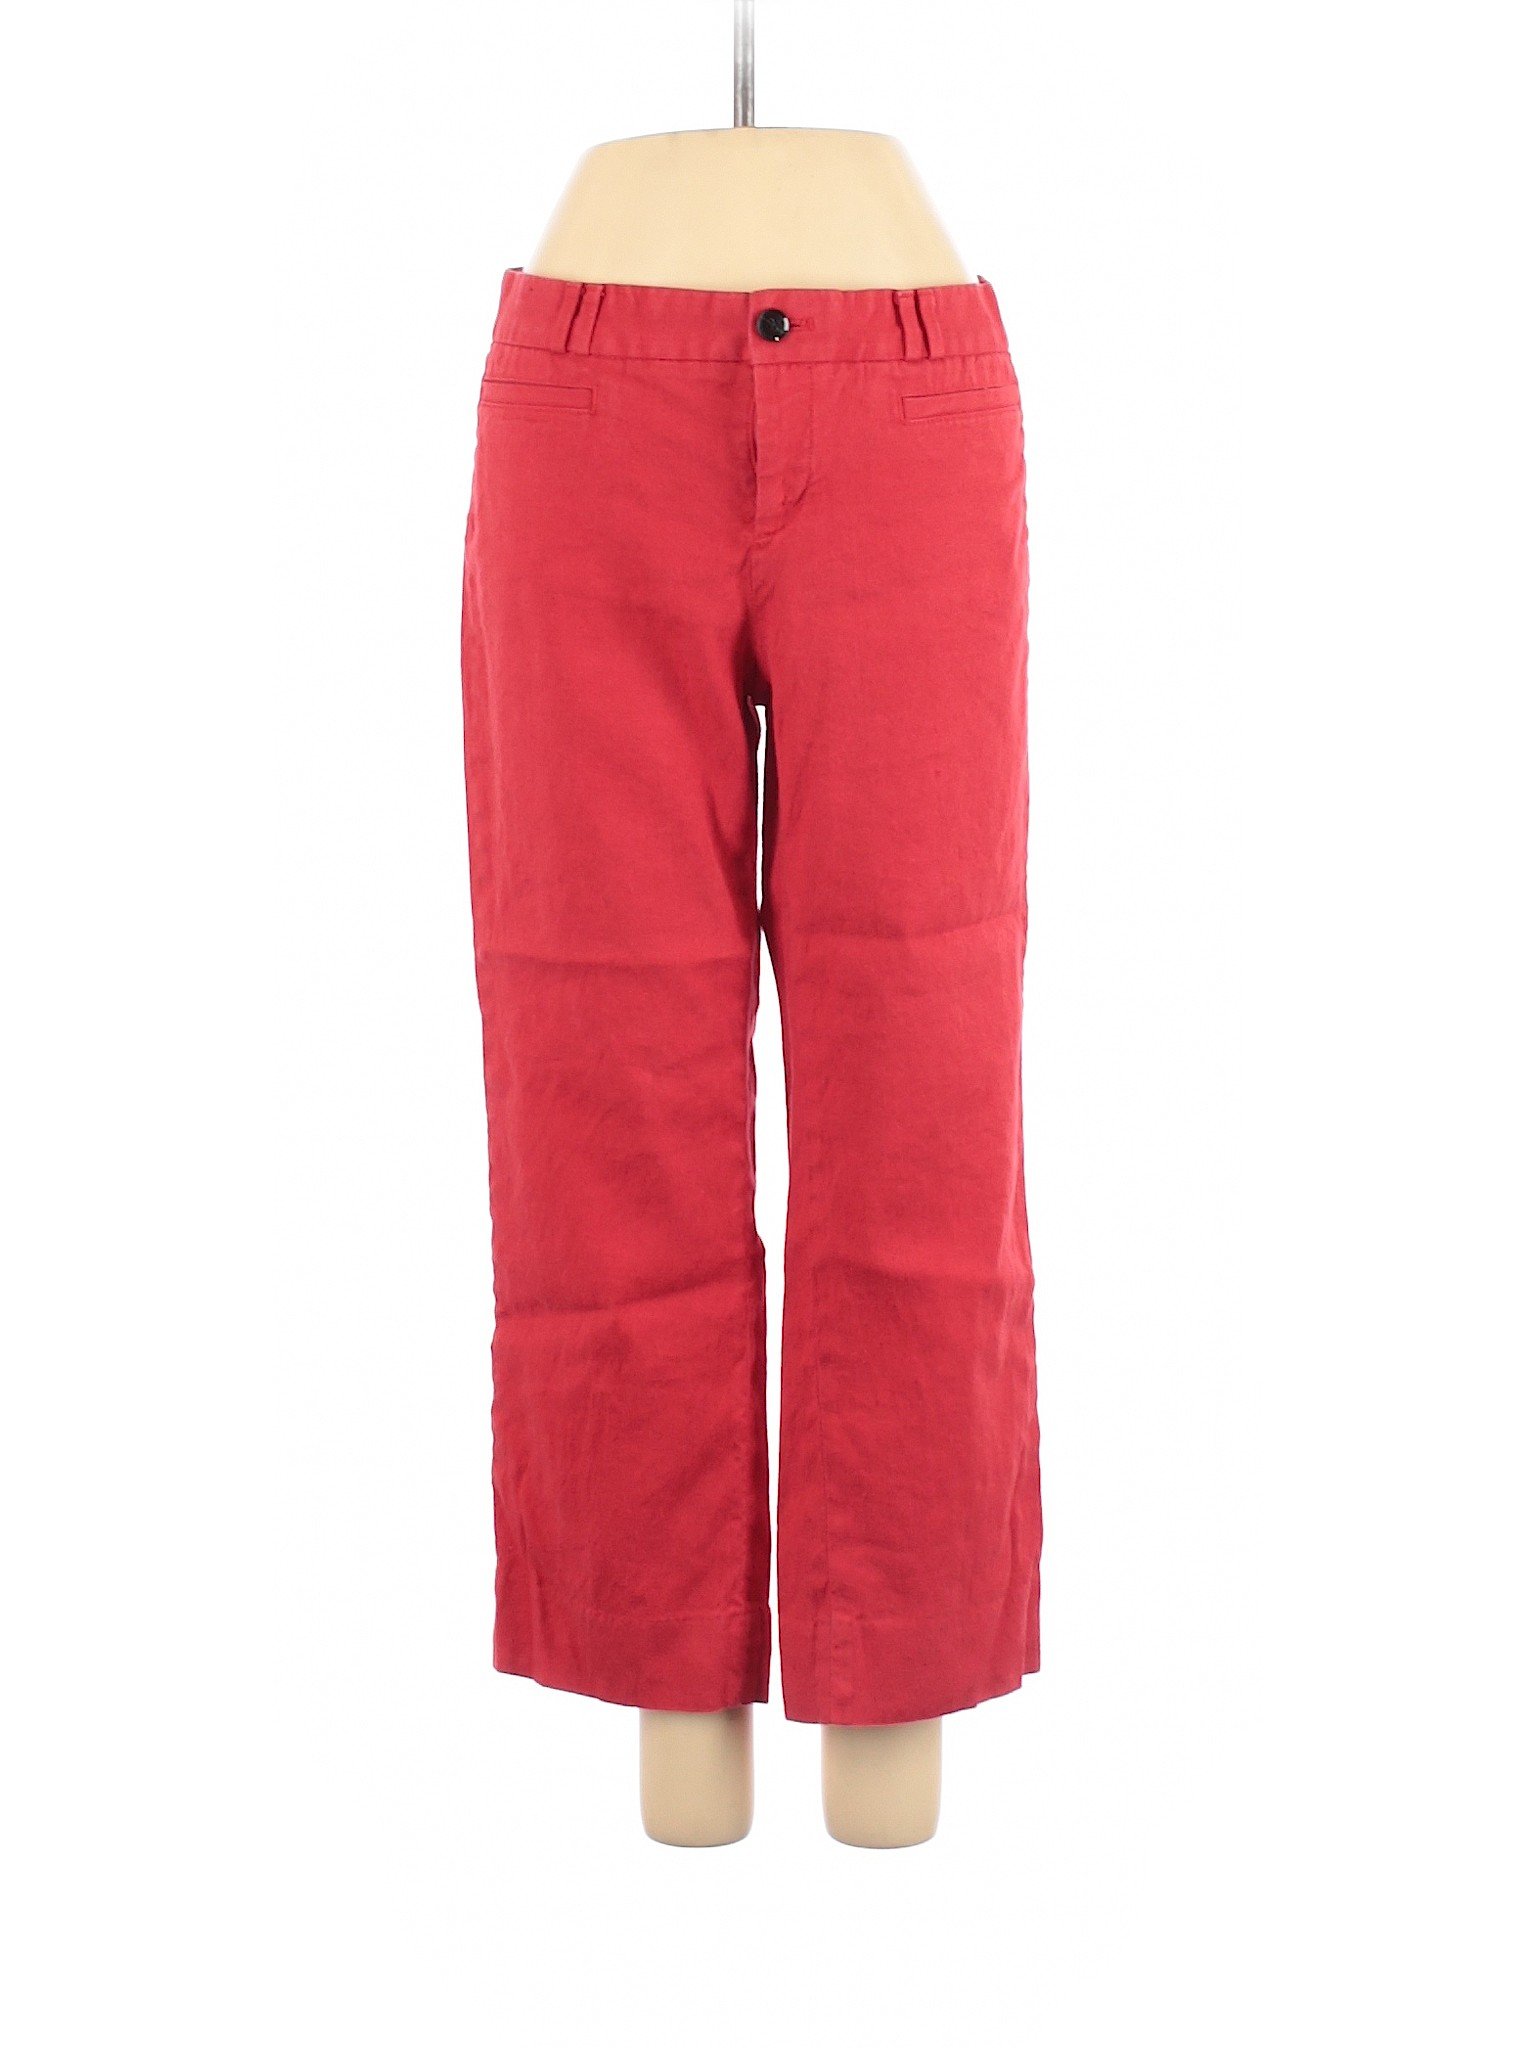 Banana Republic Women Red Linen Pants 2 Petites | eBay